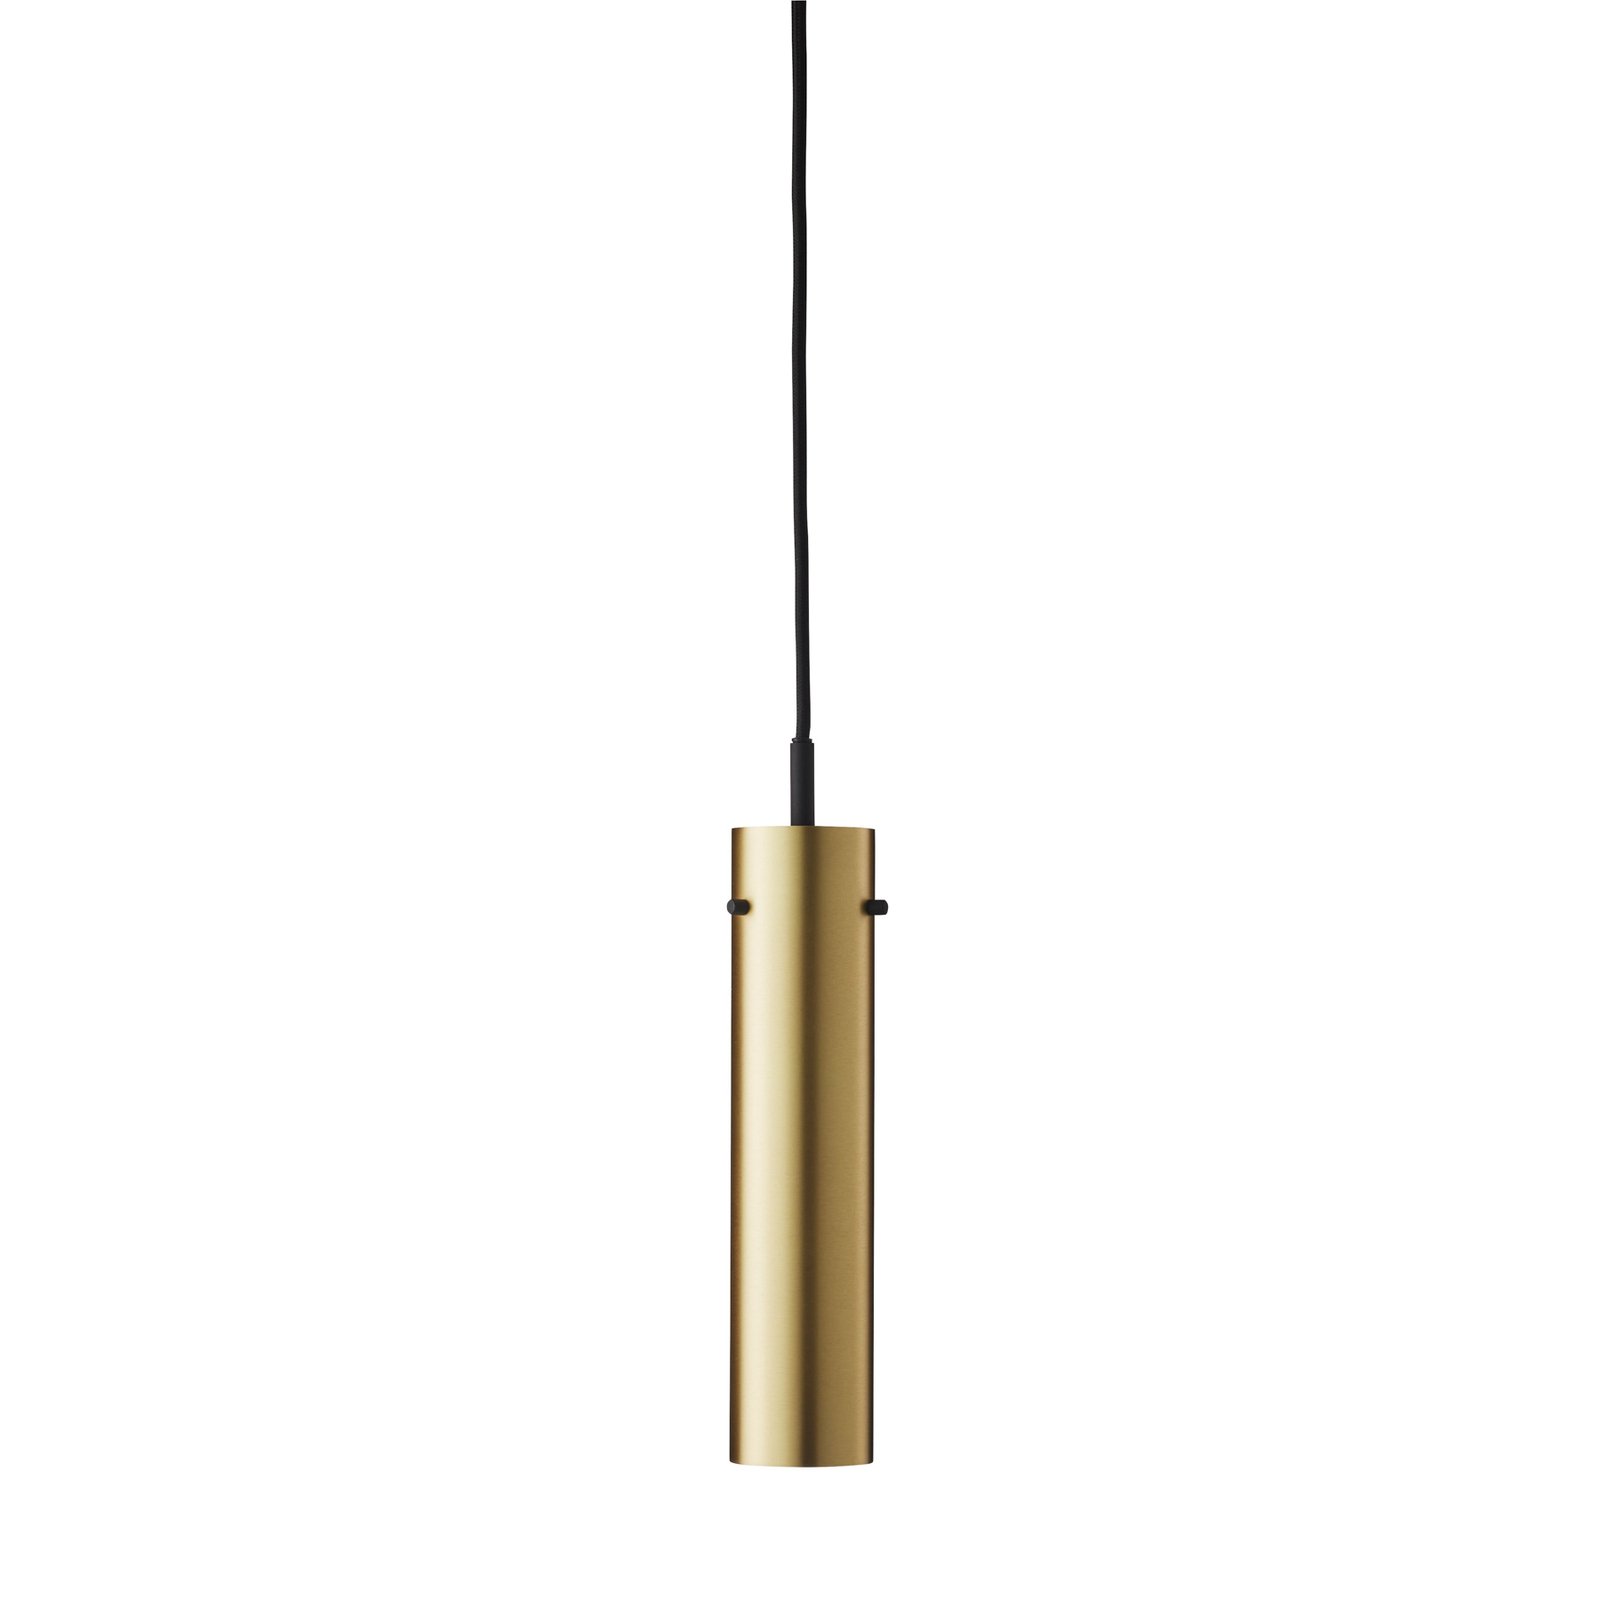 FRANDSEN viseća svjetiljka FM2014, mesing, polirana, visina 24 cm